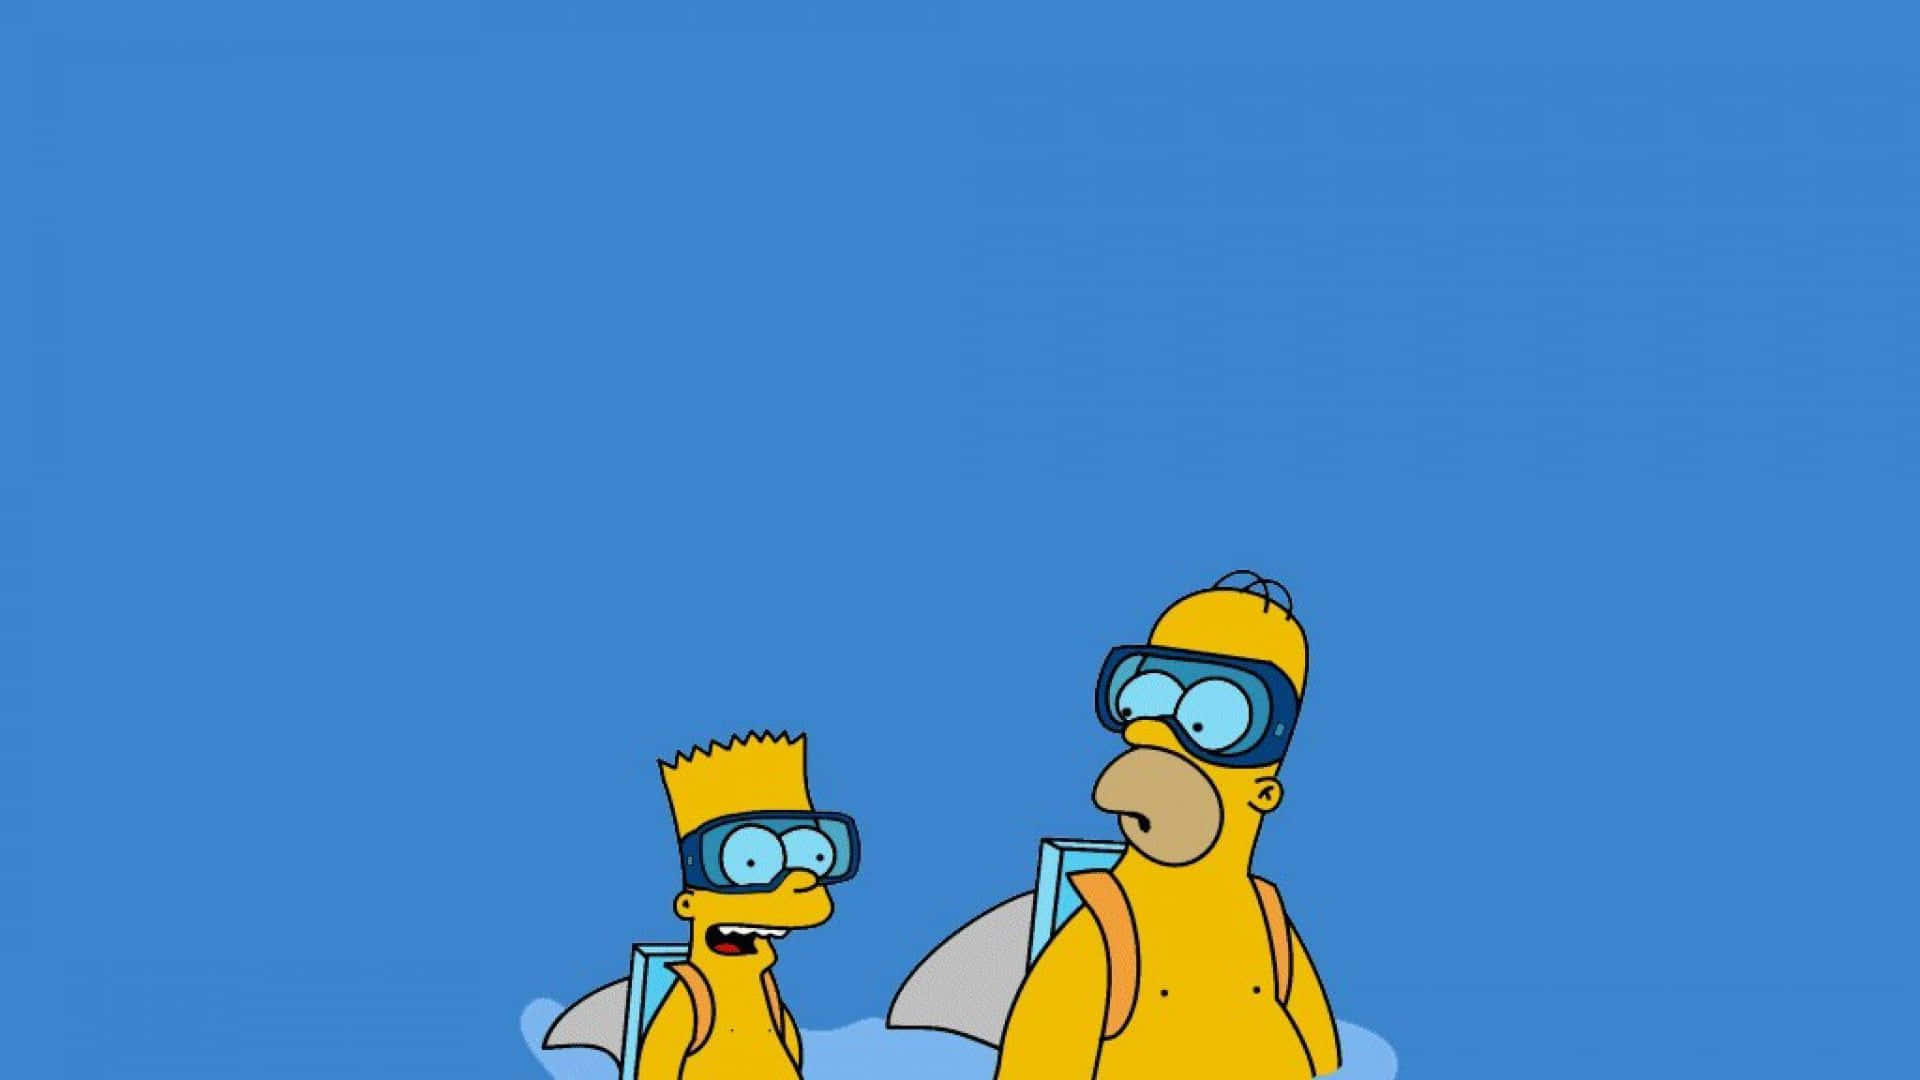 Diesimpsons-hintergrundbilder, Simpsons-hintergrundbilder, Simpsons-hintergrundbilder, Simpsons-hintergrundbilder Wallpaper